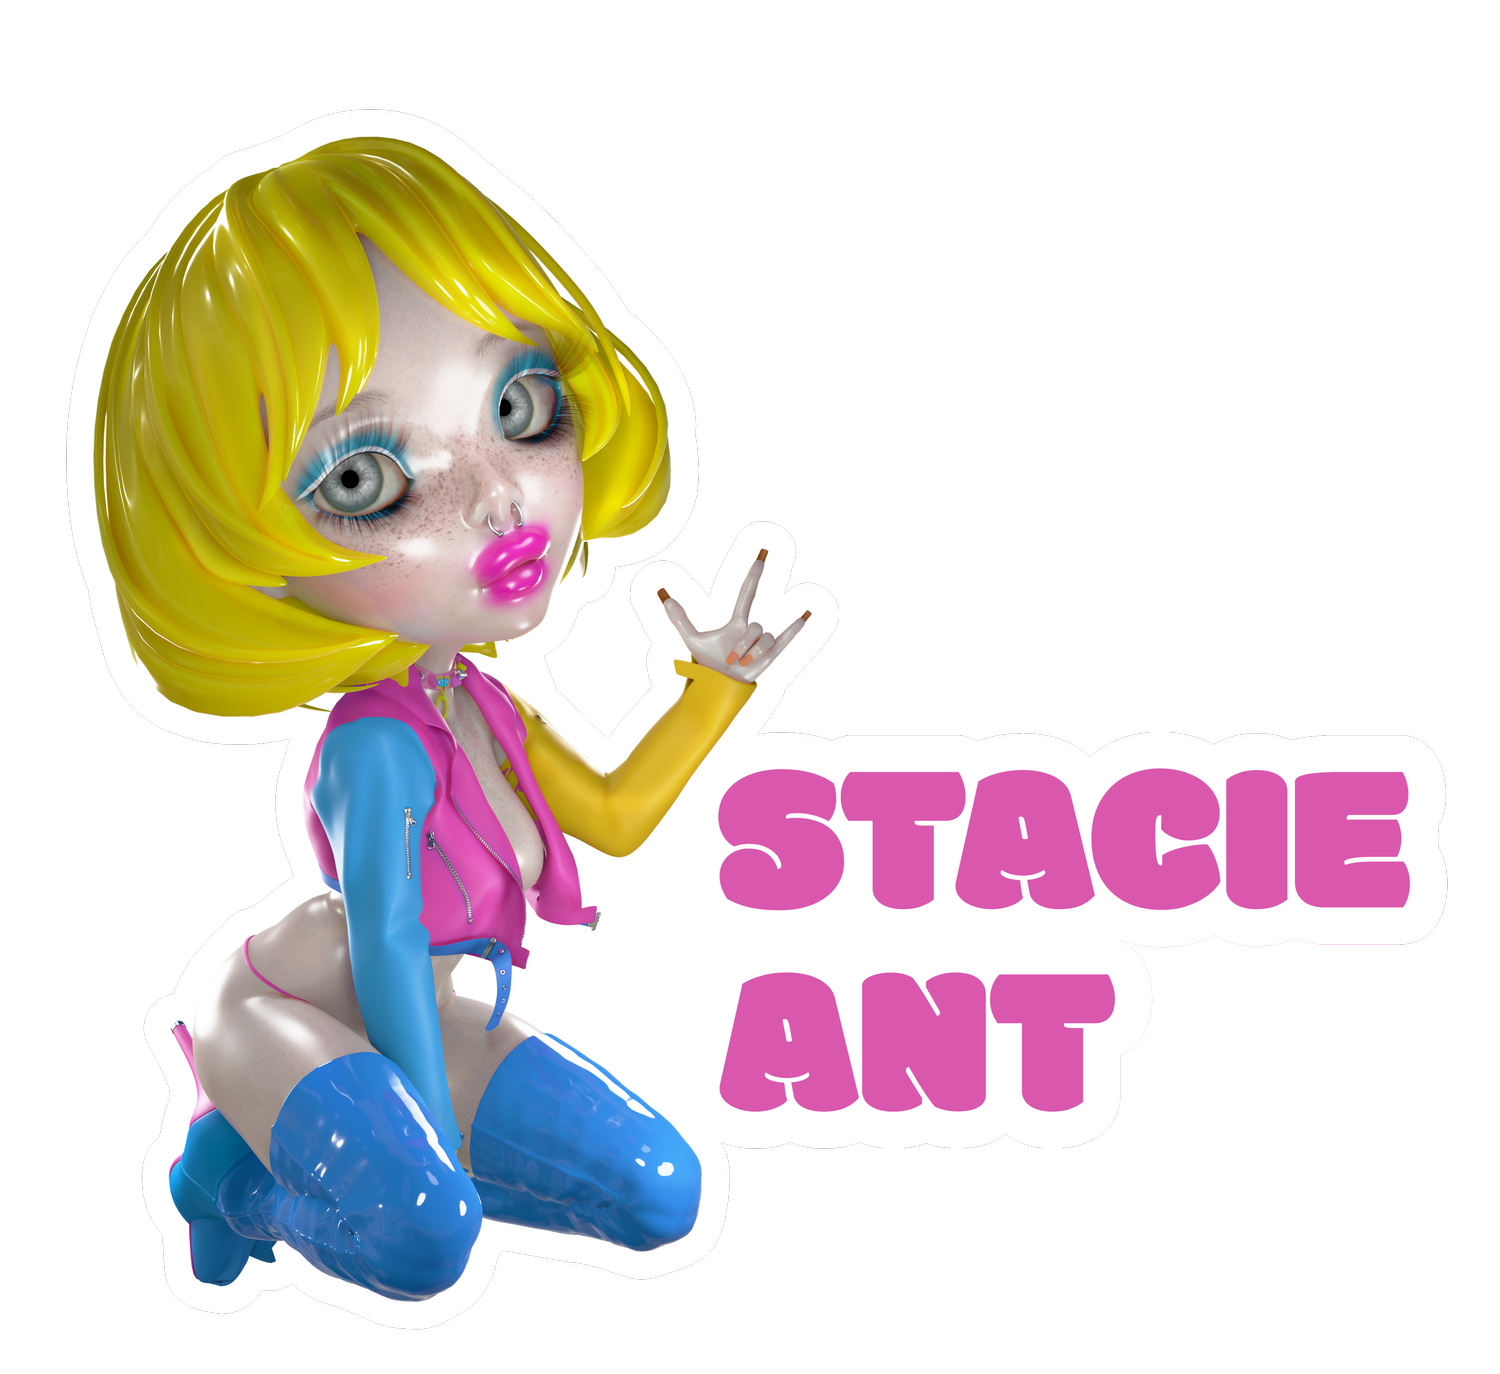 Stacie Ant